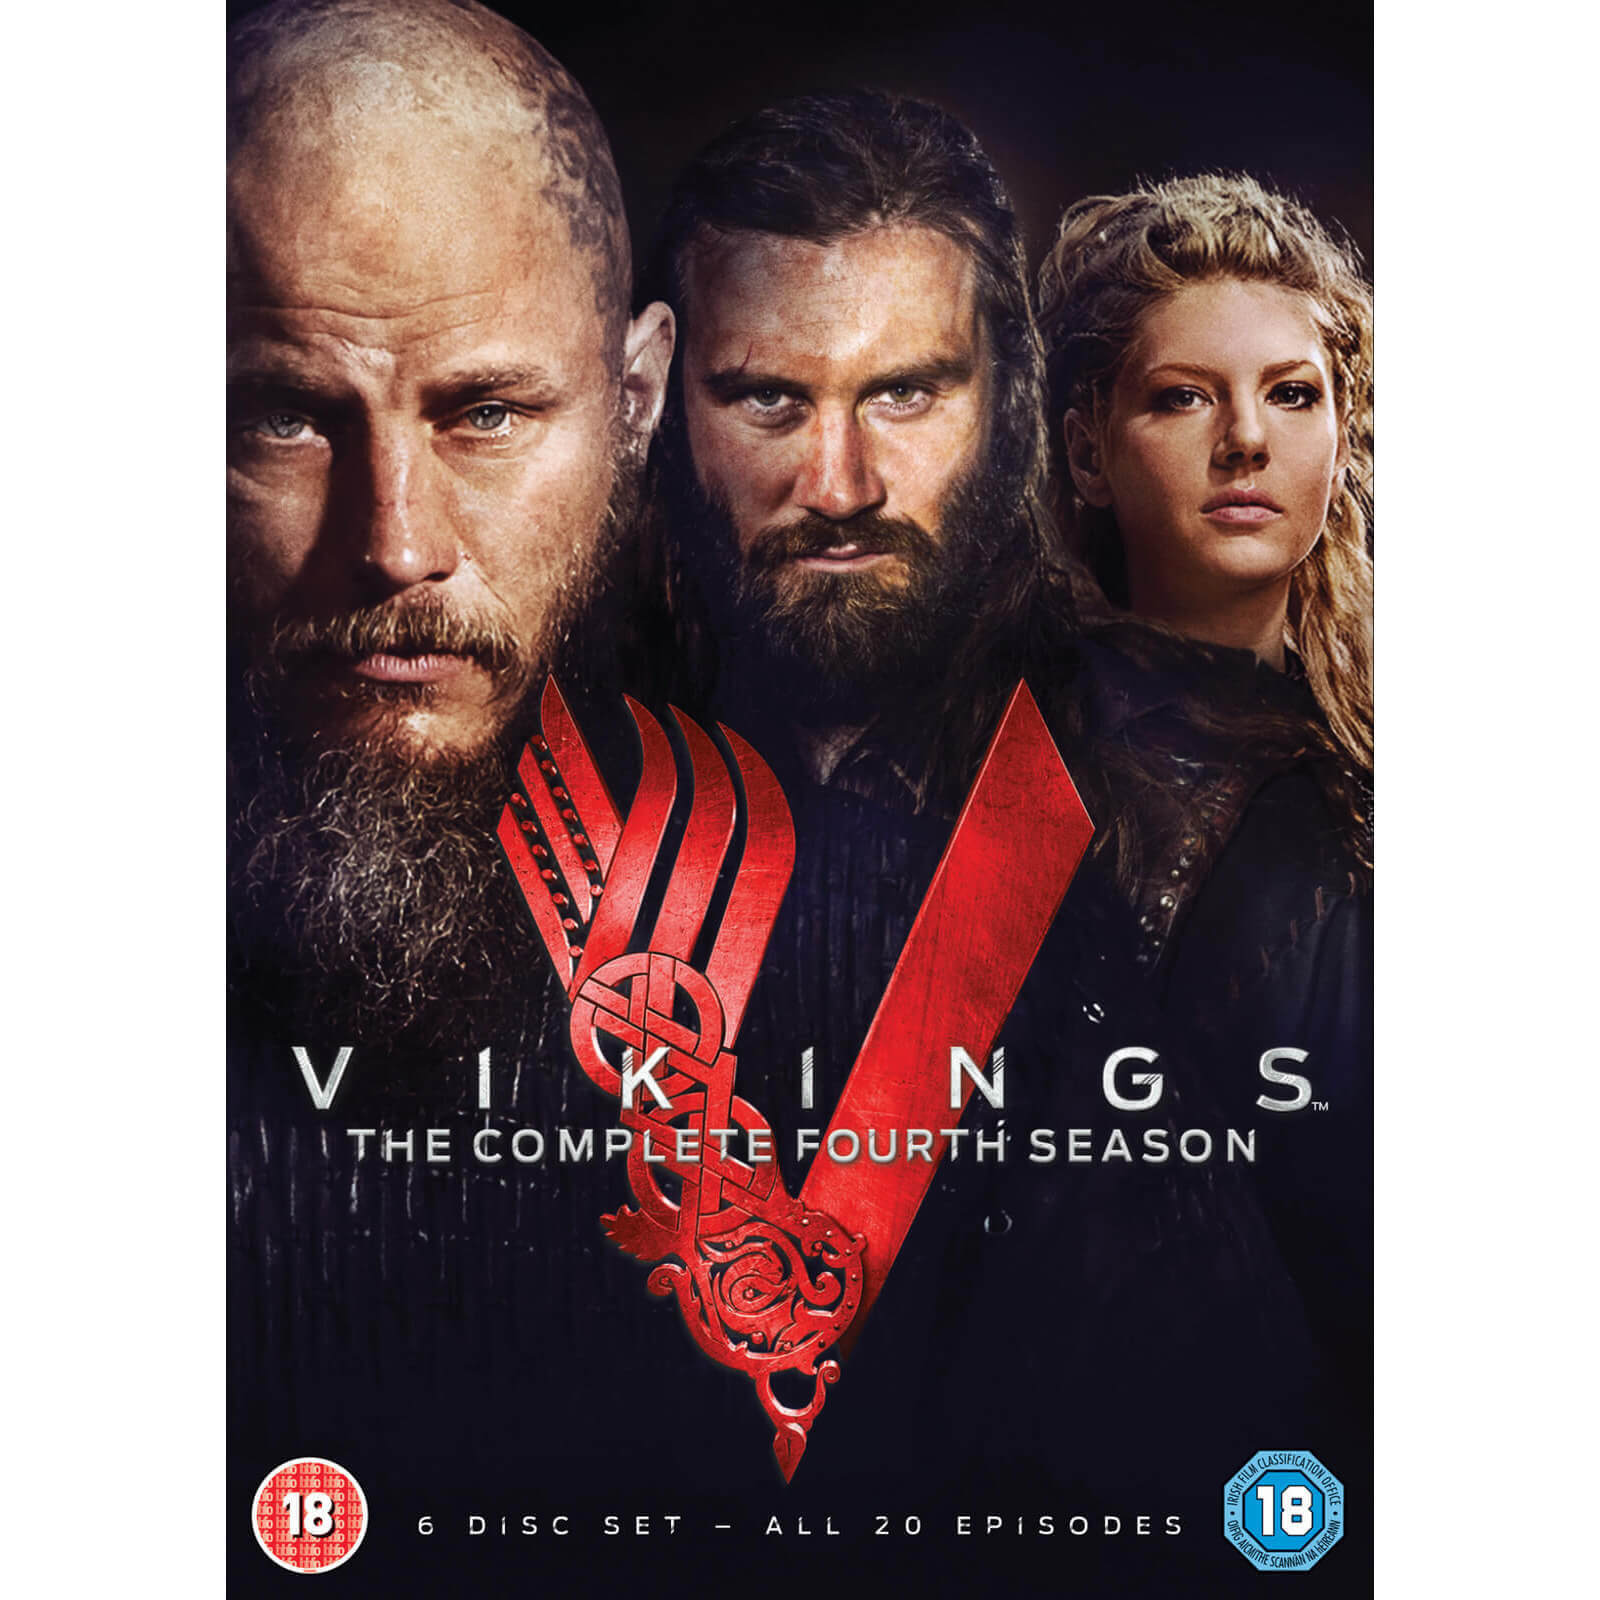 Vikings komplett - Staffel 4 von 20th Century Fox